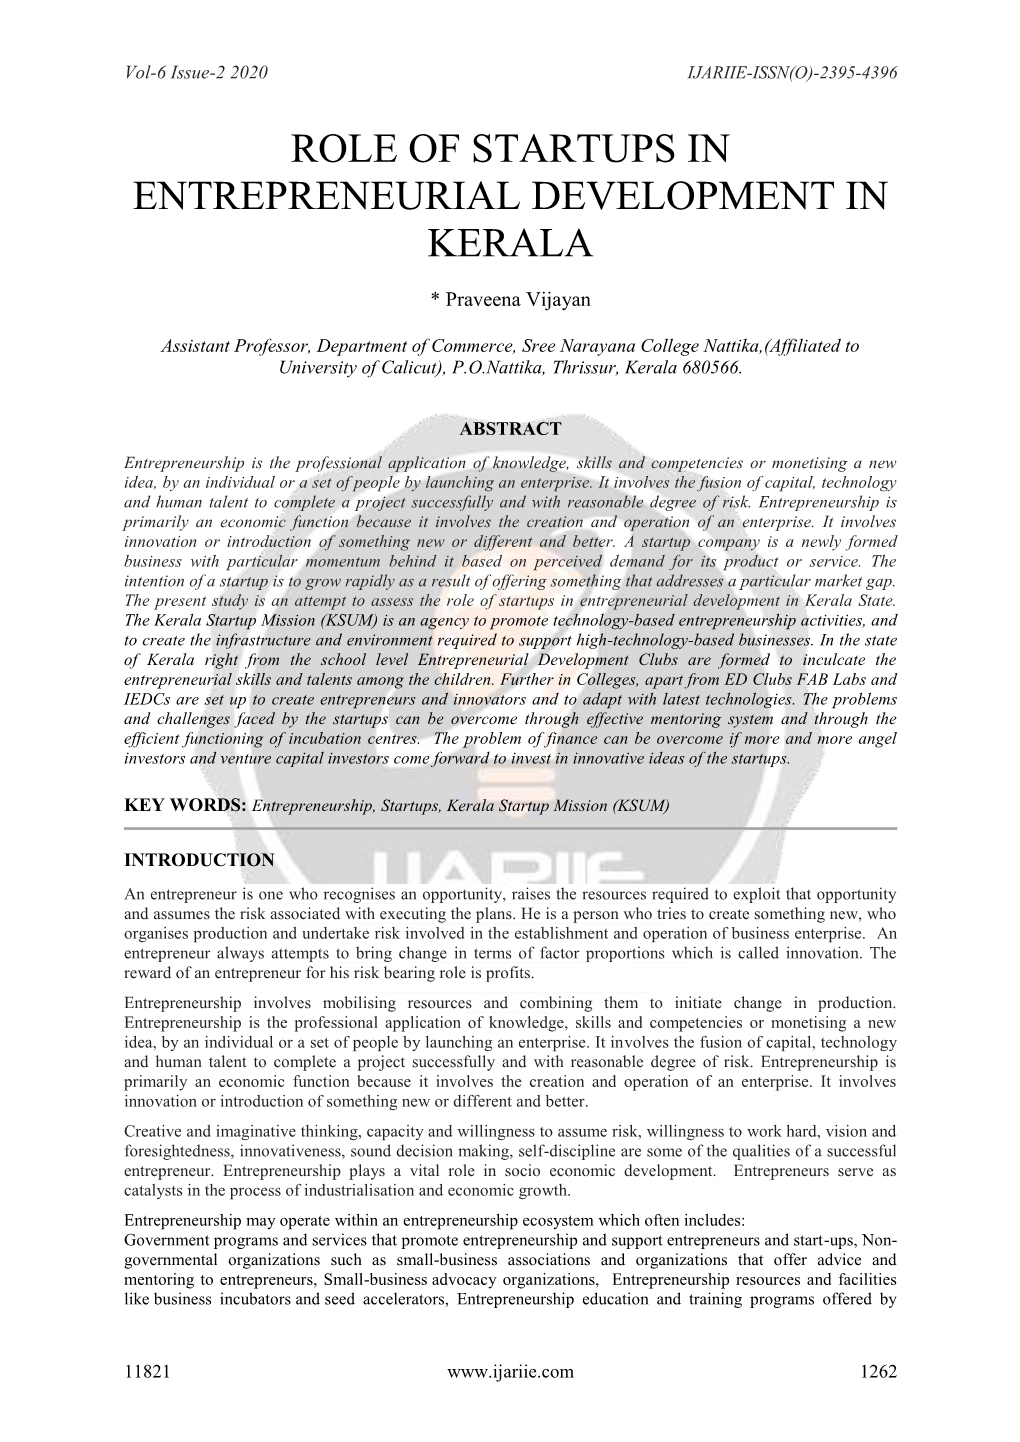 Role of Startups in Entrepreneurial Development in Kerala